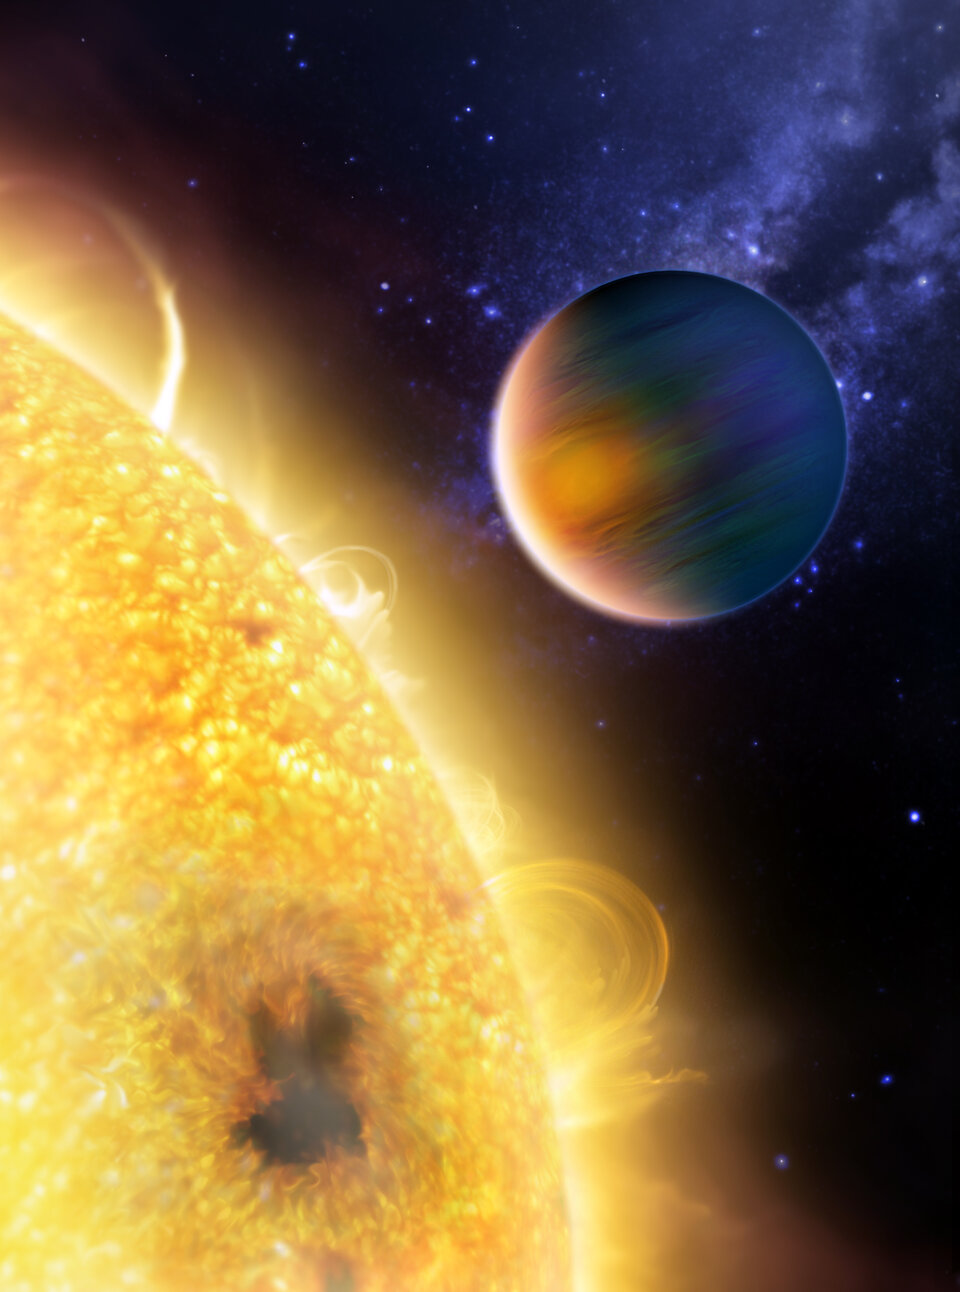 Extrasolar planet HD 189733b